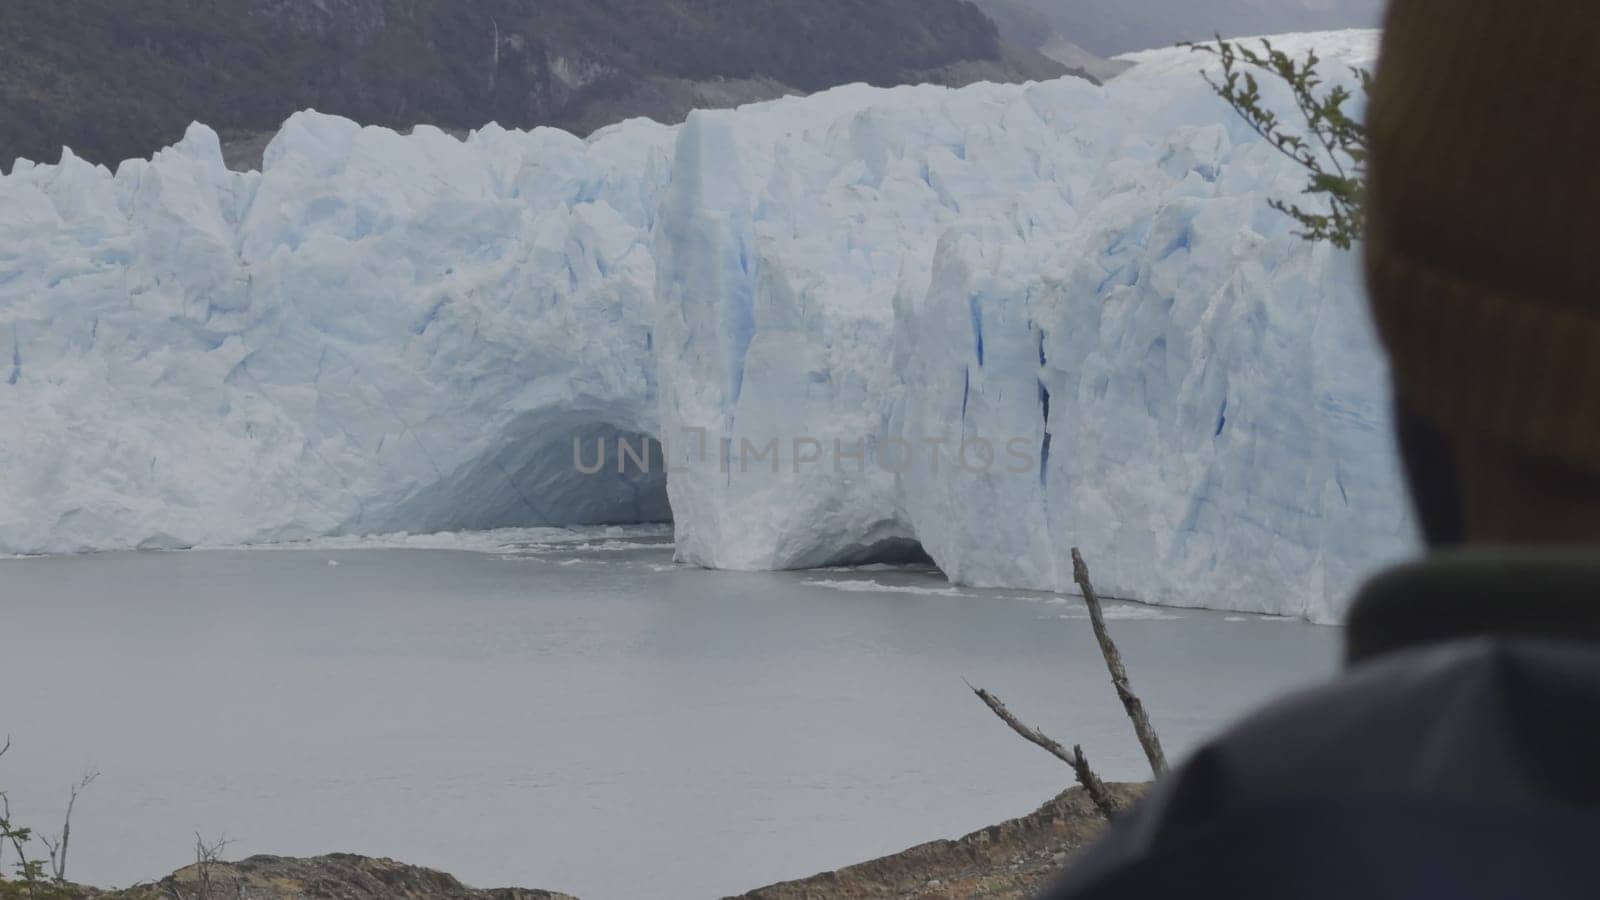 Tourist admires Perito Moreno Glacier's immense ice walls from behind, captured in a photo.